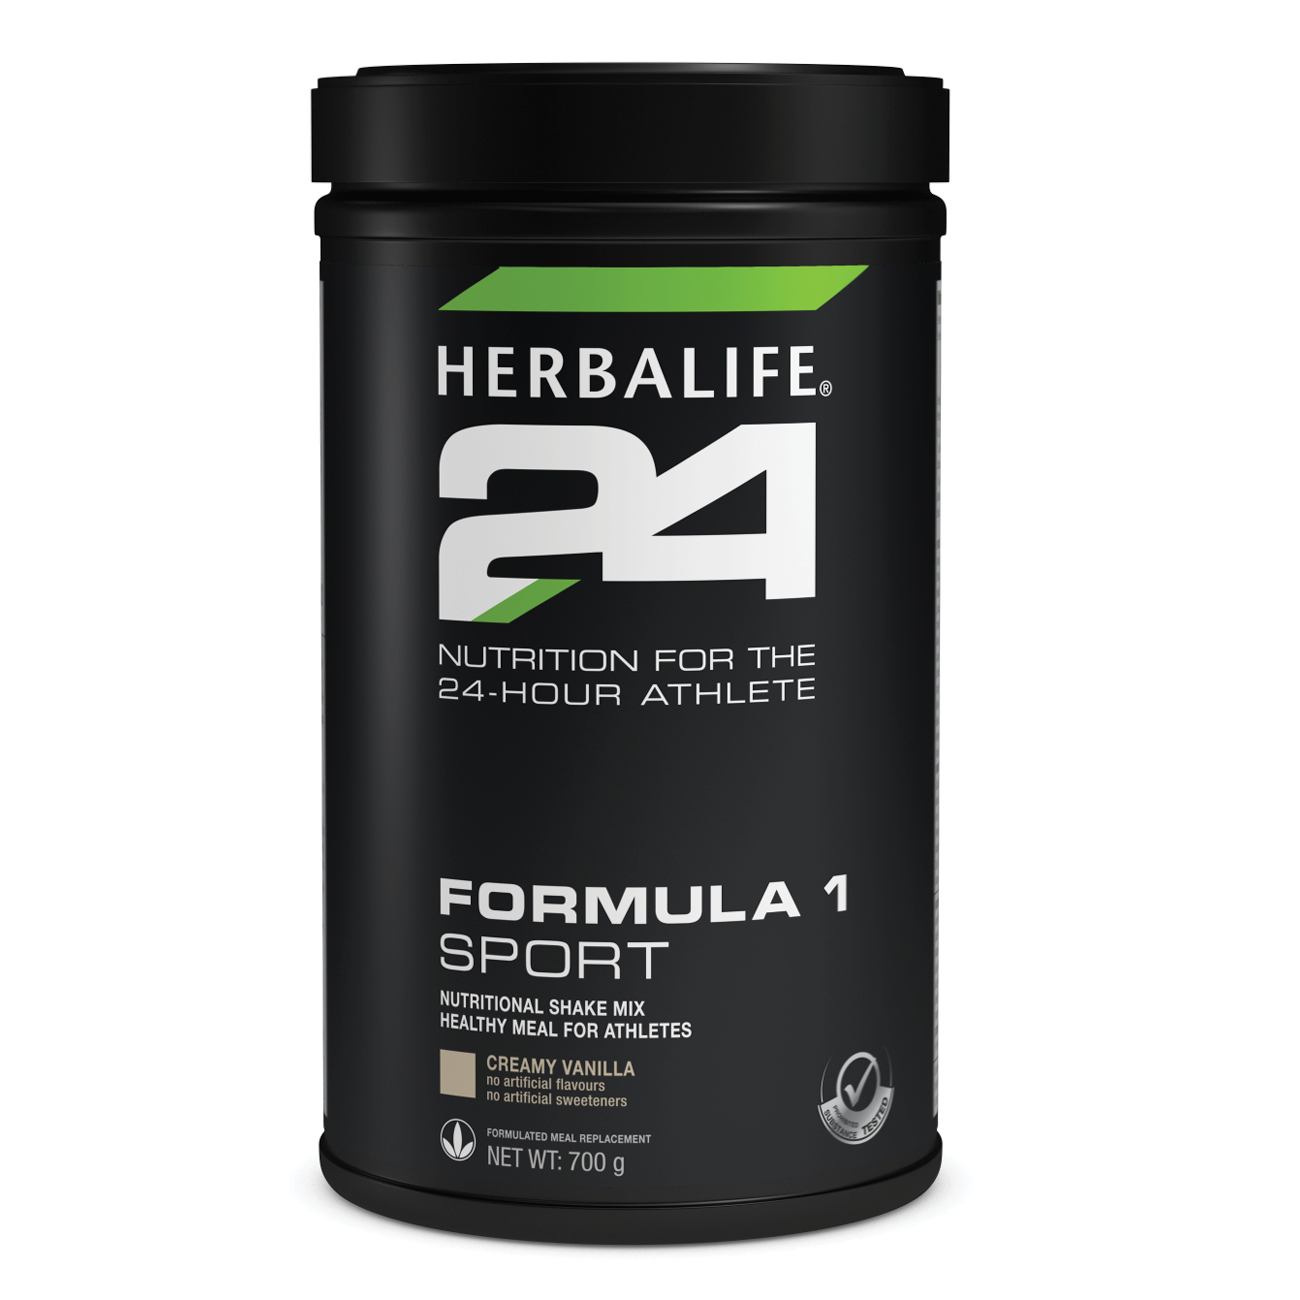 015K Protein-Shake Herbalife24 Formula 1 Sport Creamy Vanilla